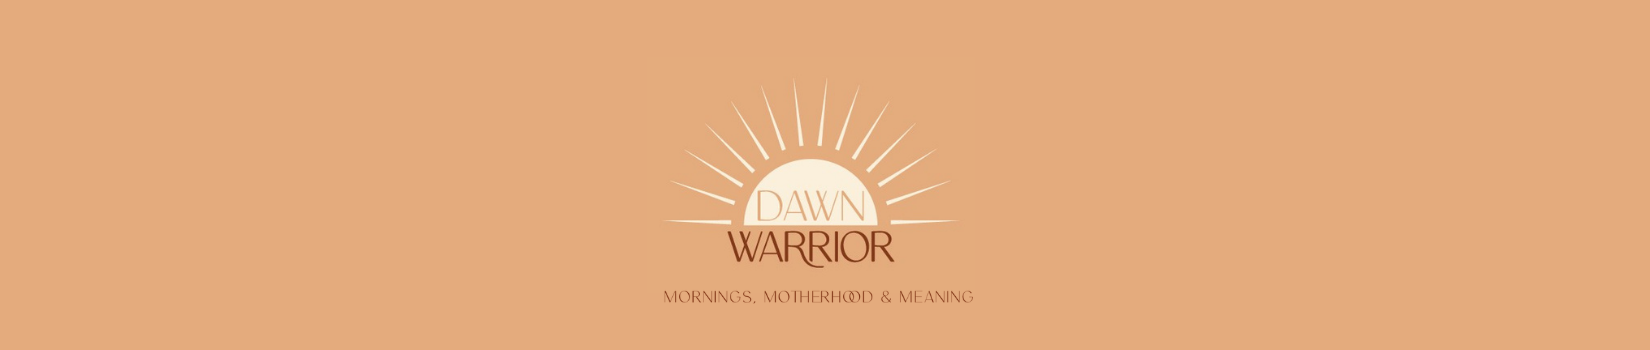 DawnWarrior